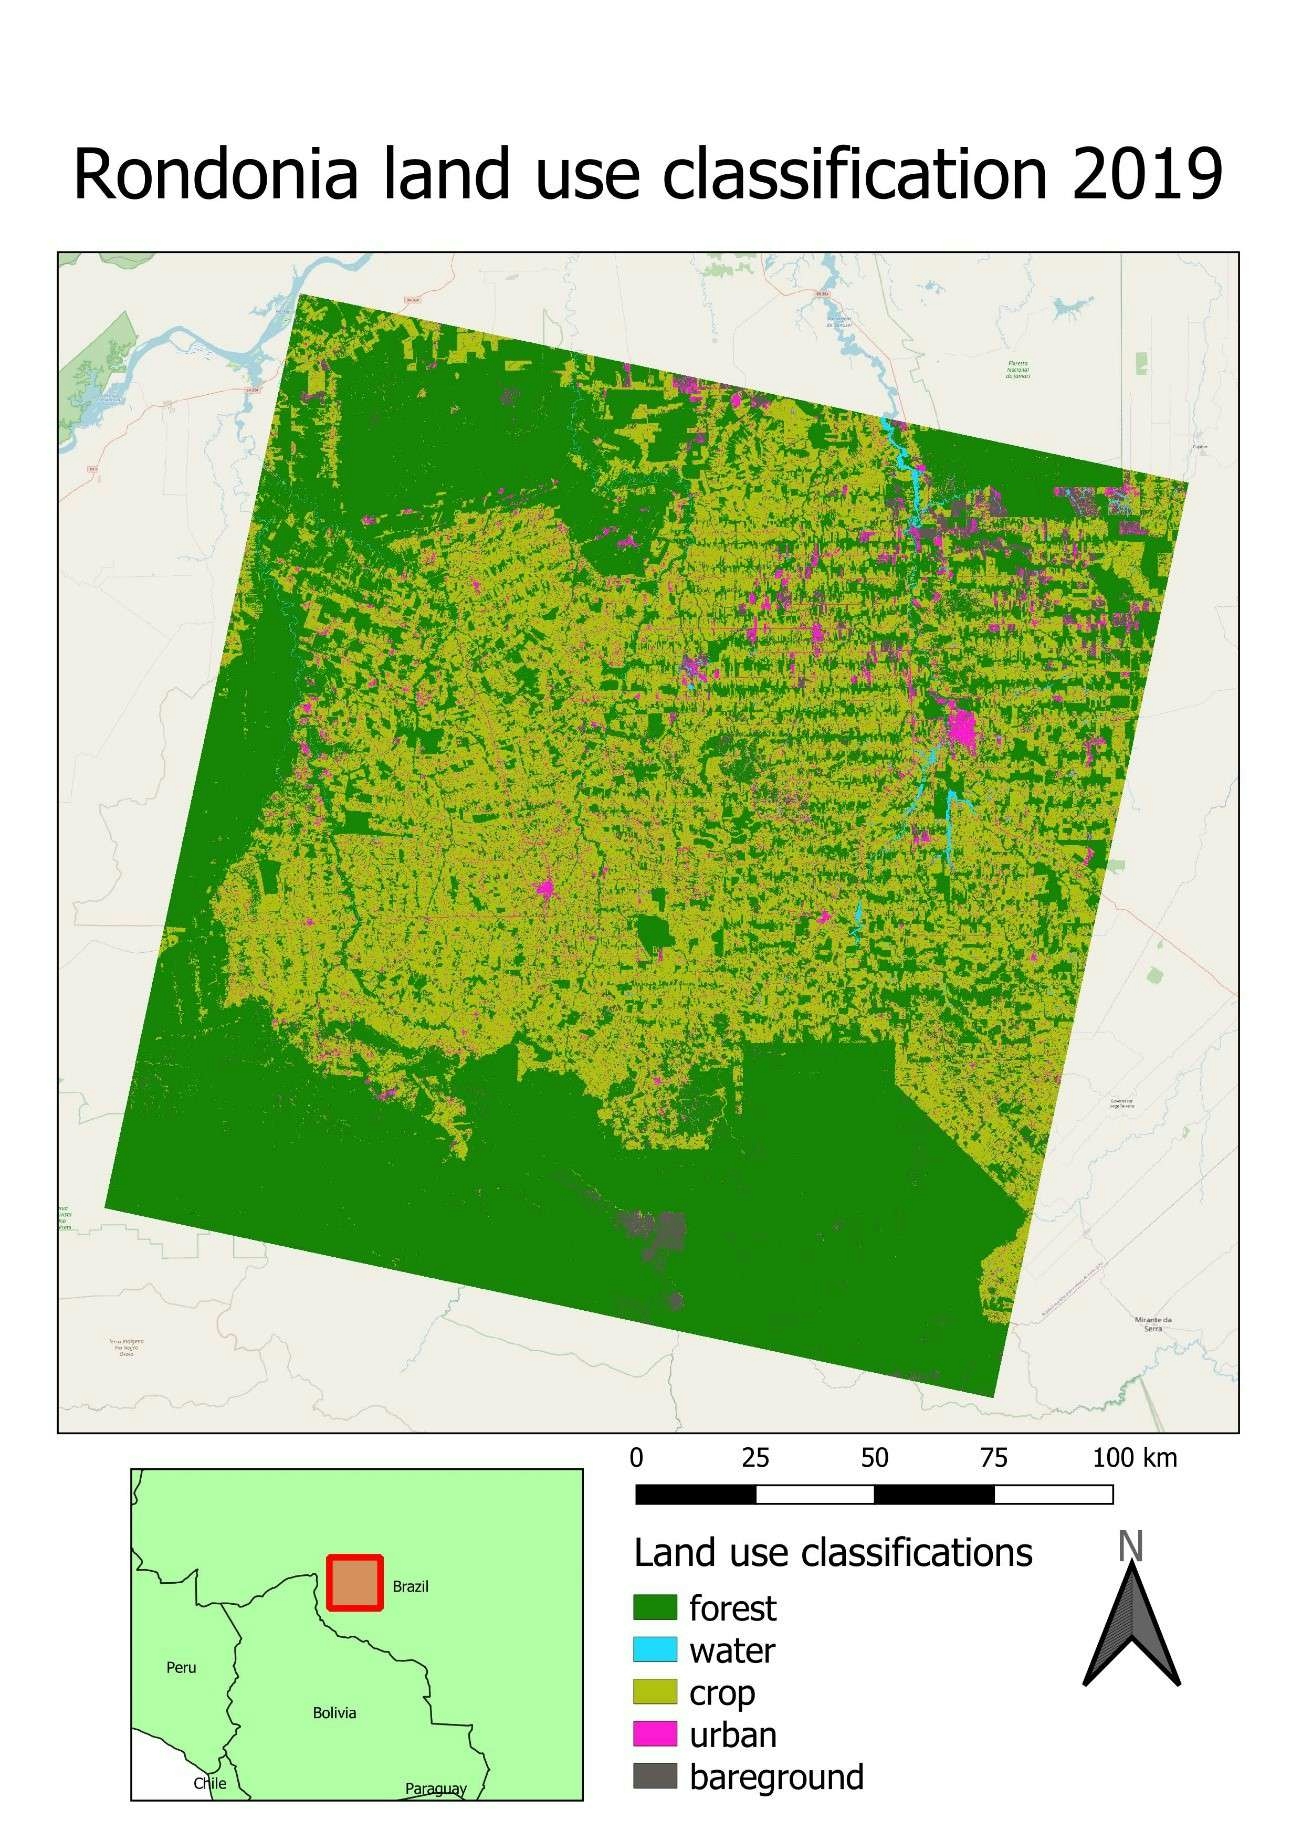 Rondonia land use classifcation